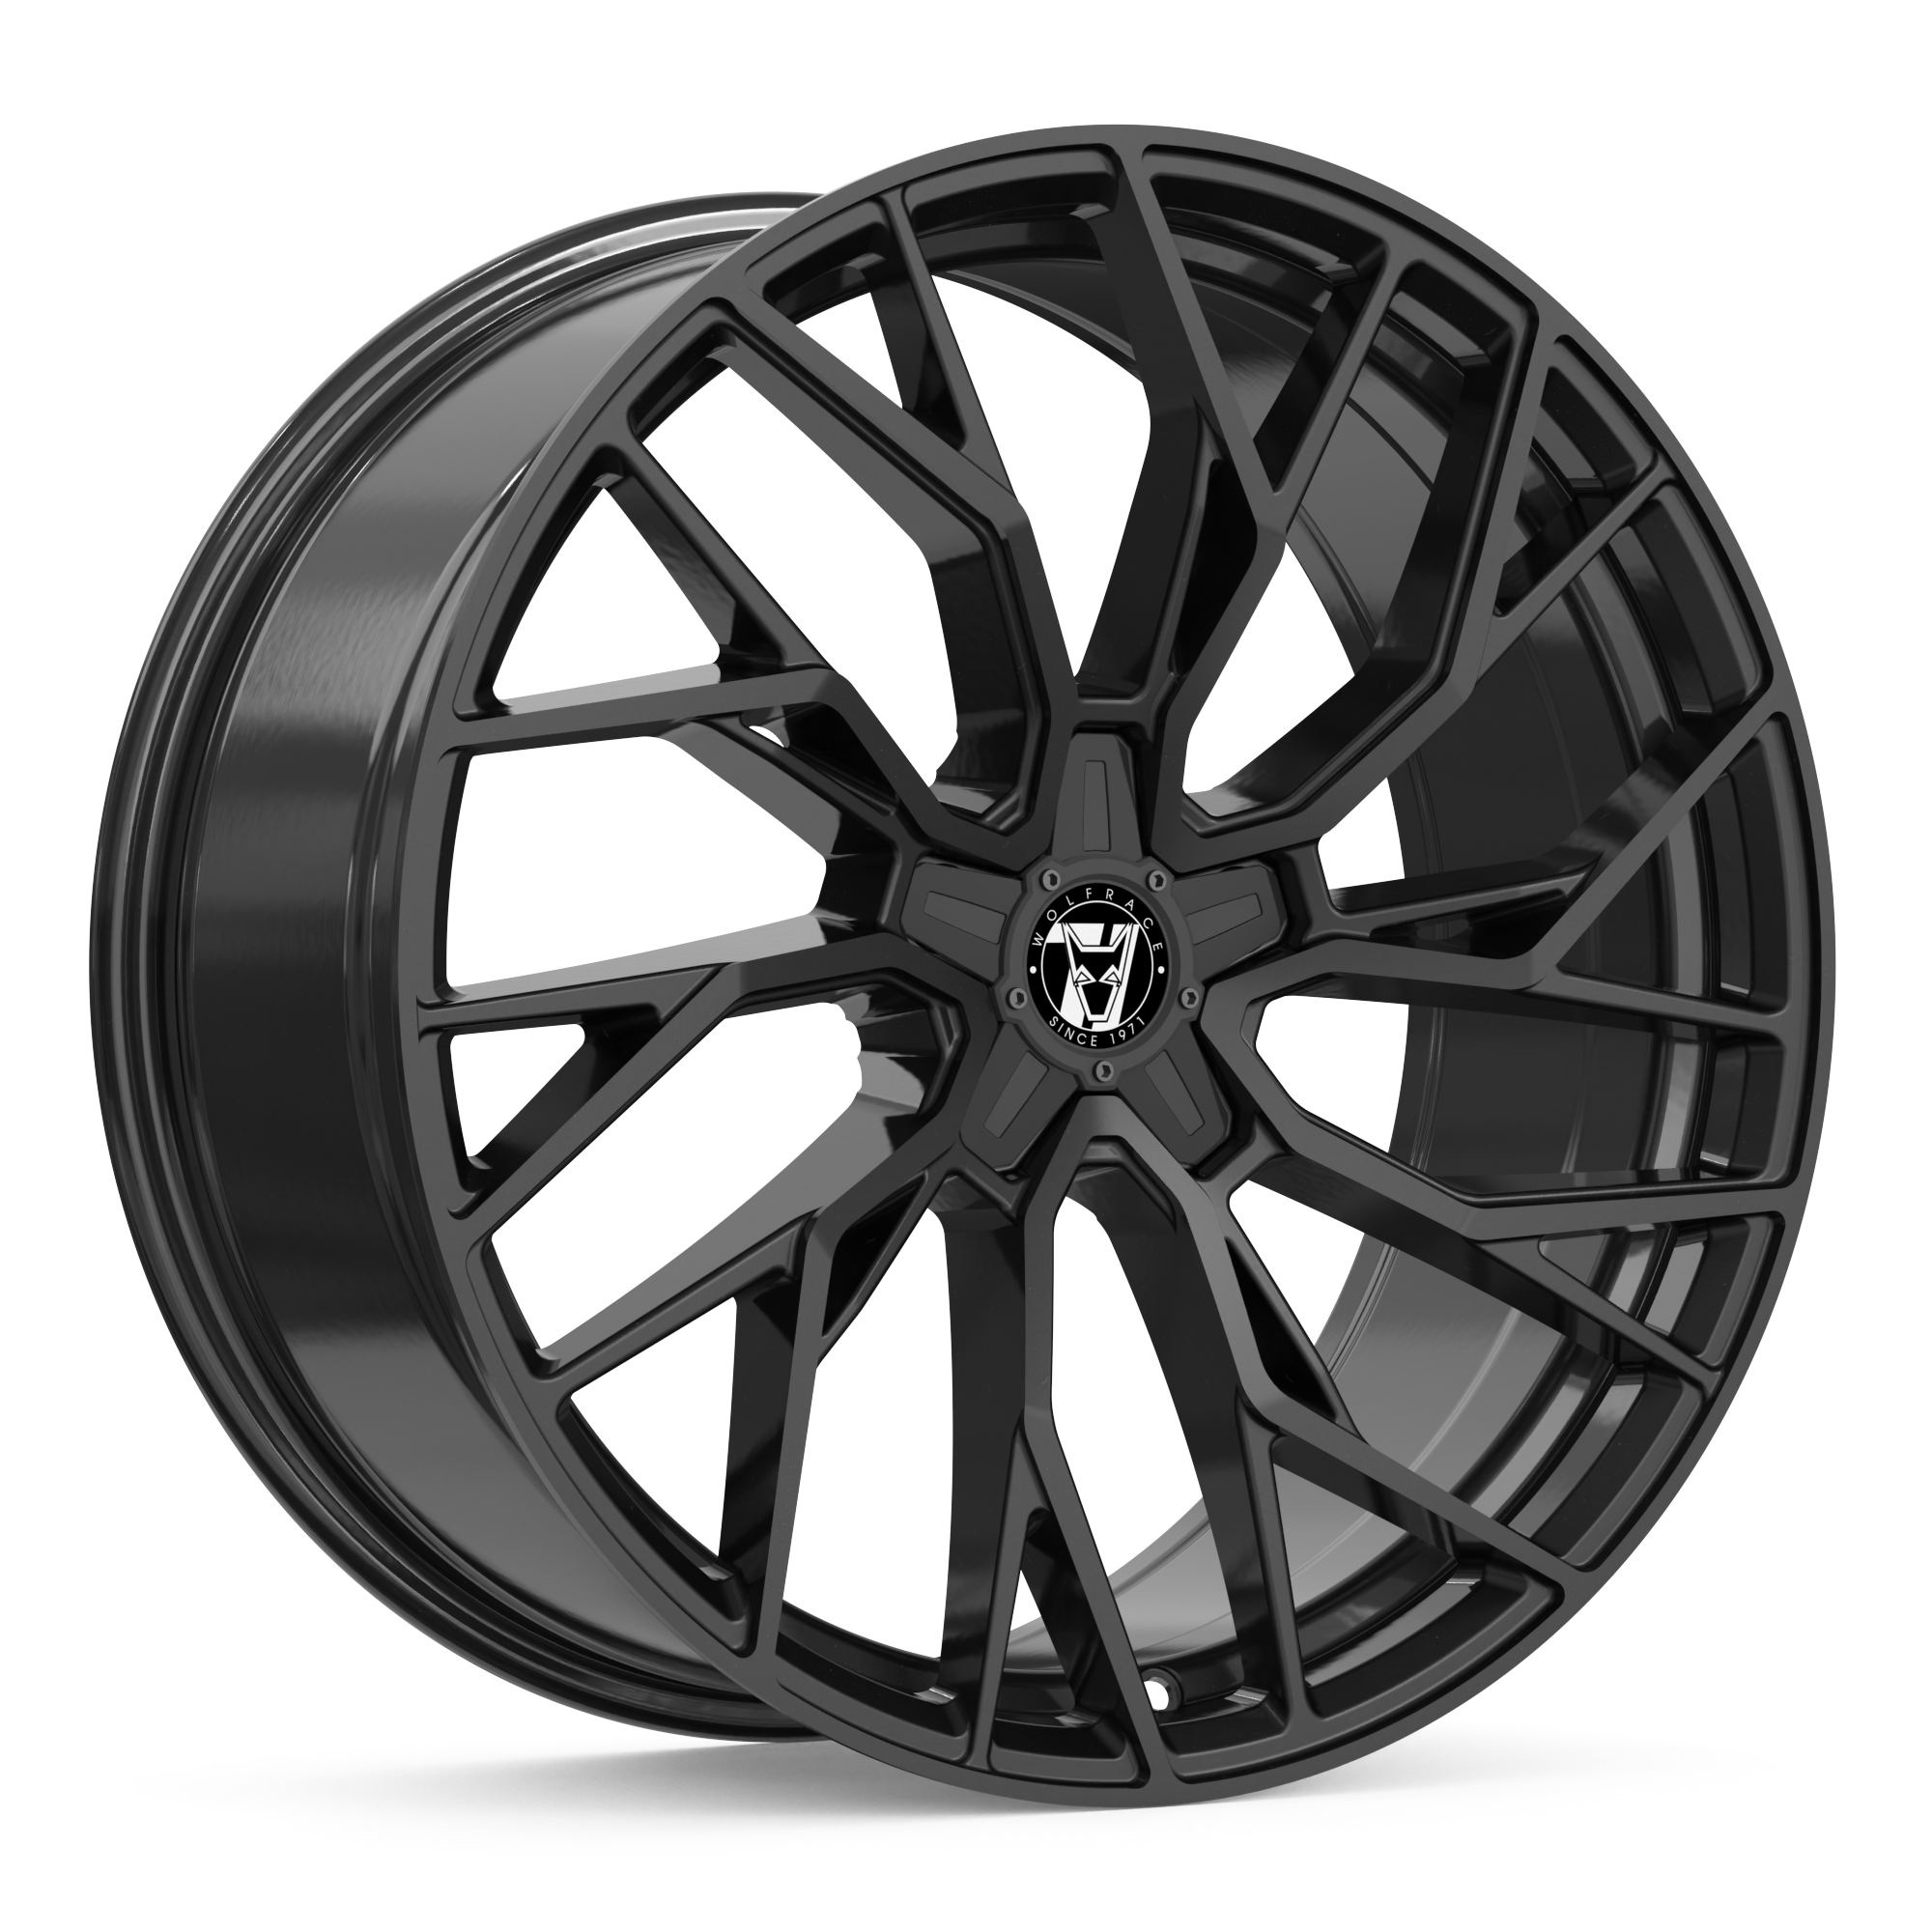 Jantes alu Demon Wheels 71 Voodoo Black Edition [9.5x22] -5x114.3- ET 38